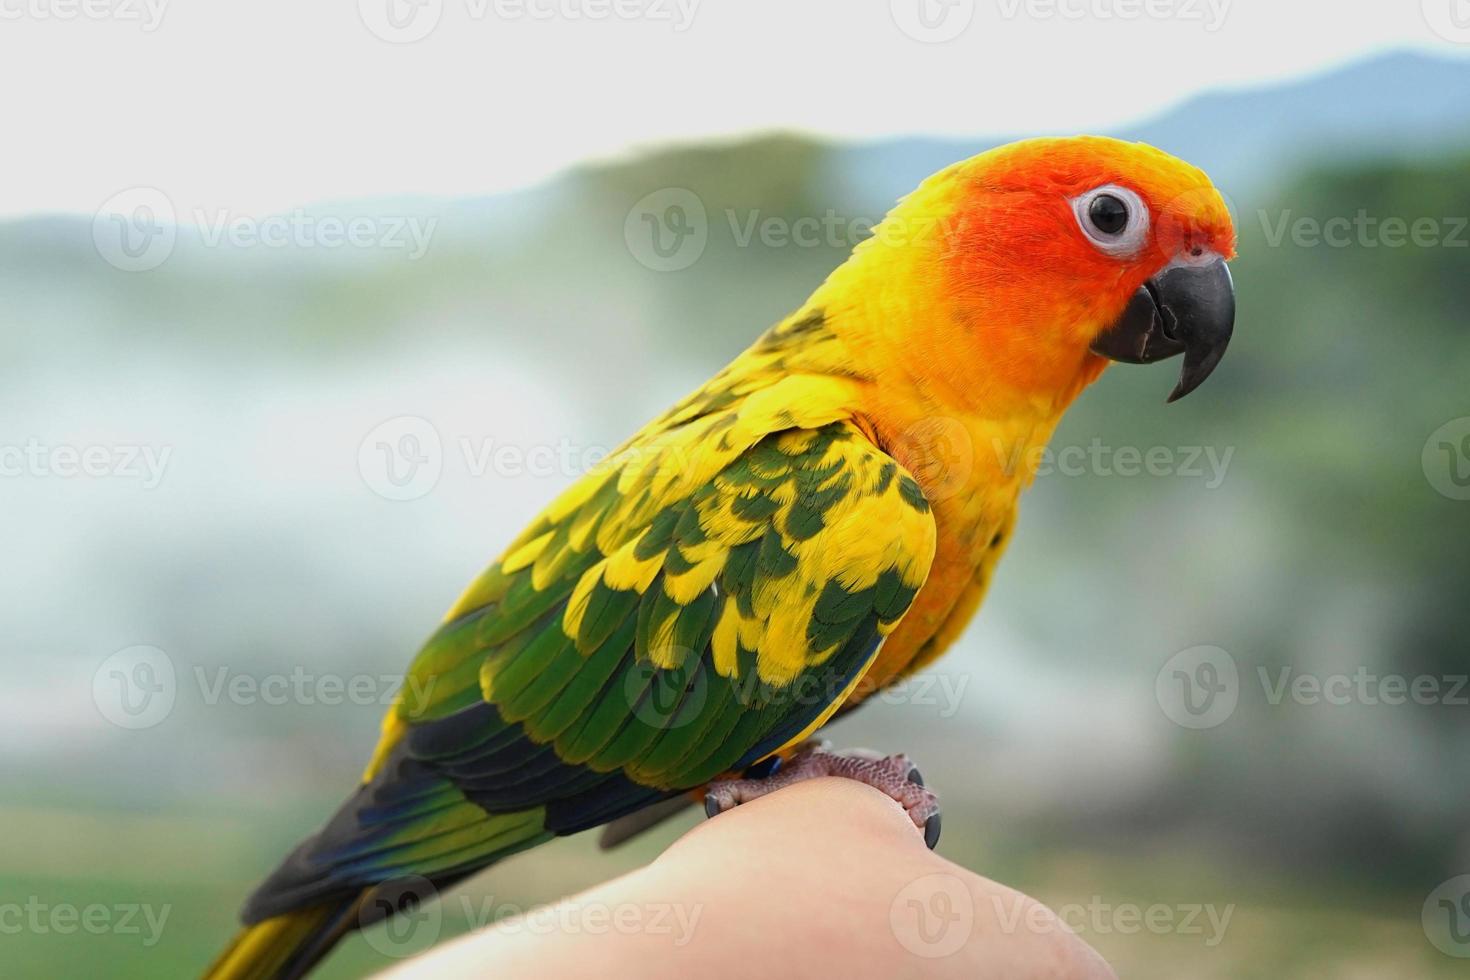 sun conure loro o pájaro hermoso es aratinga tiene amarillo en la mano fondo borroso montañas y cielo, aratinga solstitialis mascota exótica adorable, nativo de amazon foto